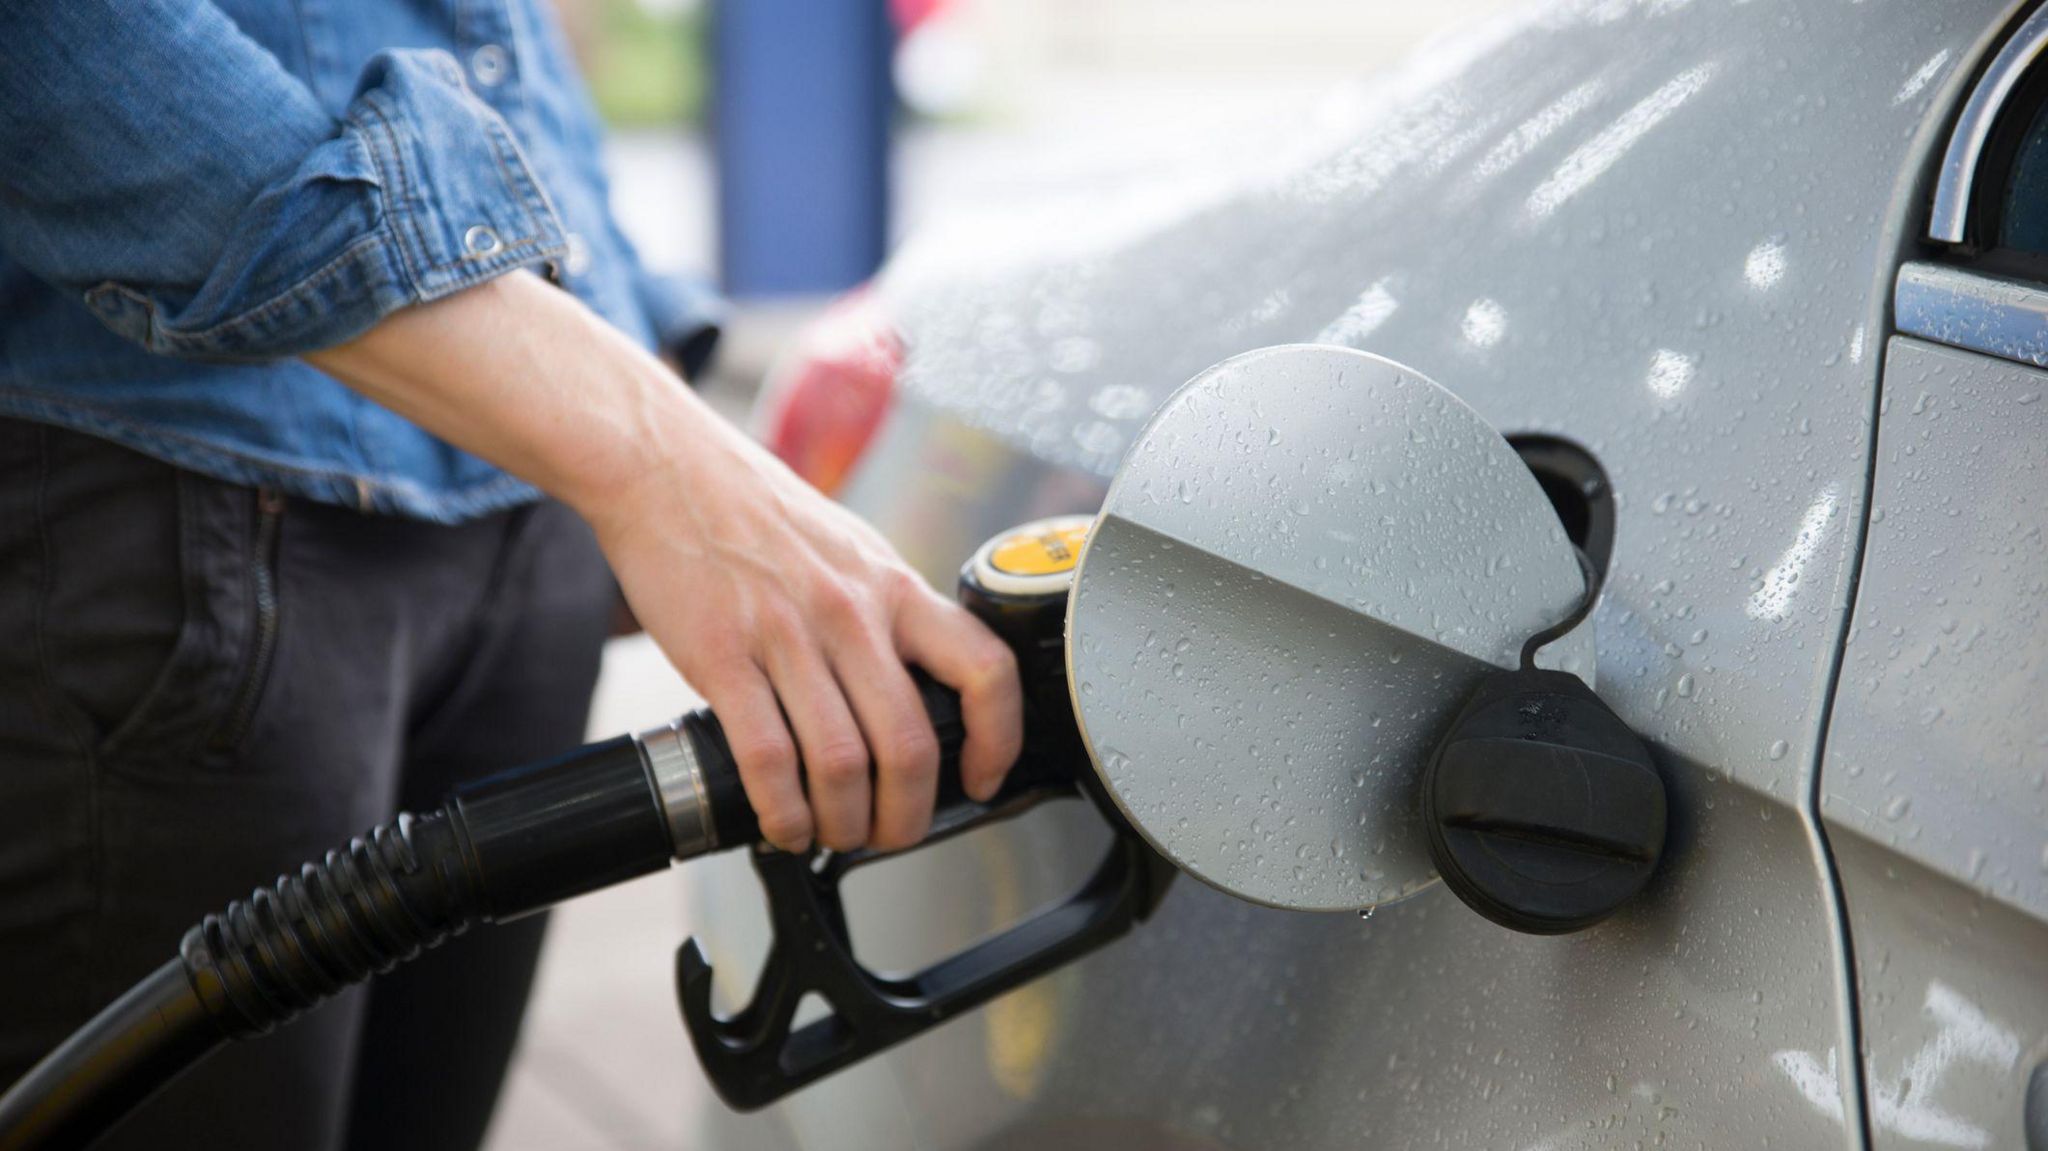 A woman holding a petrol pump as she refuels her car